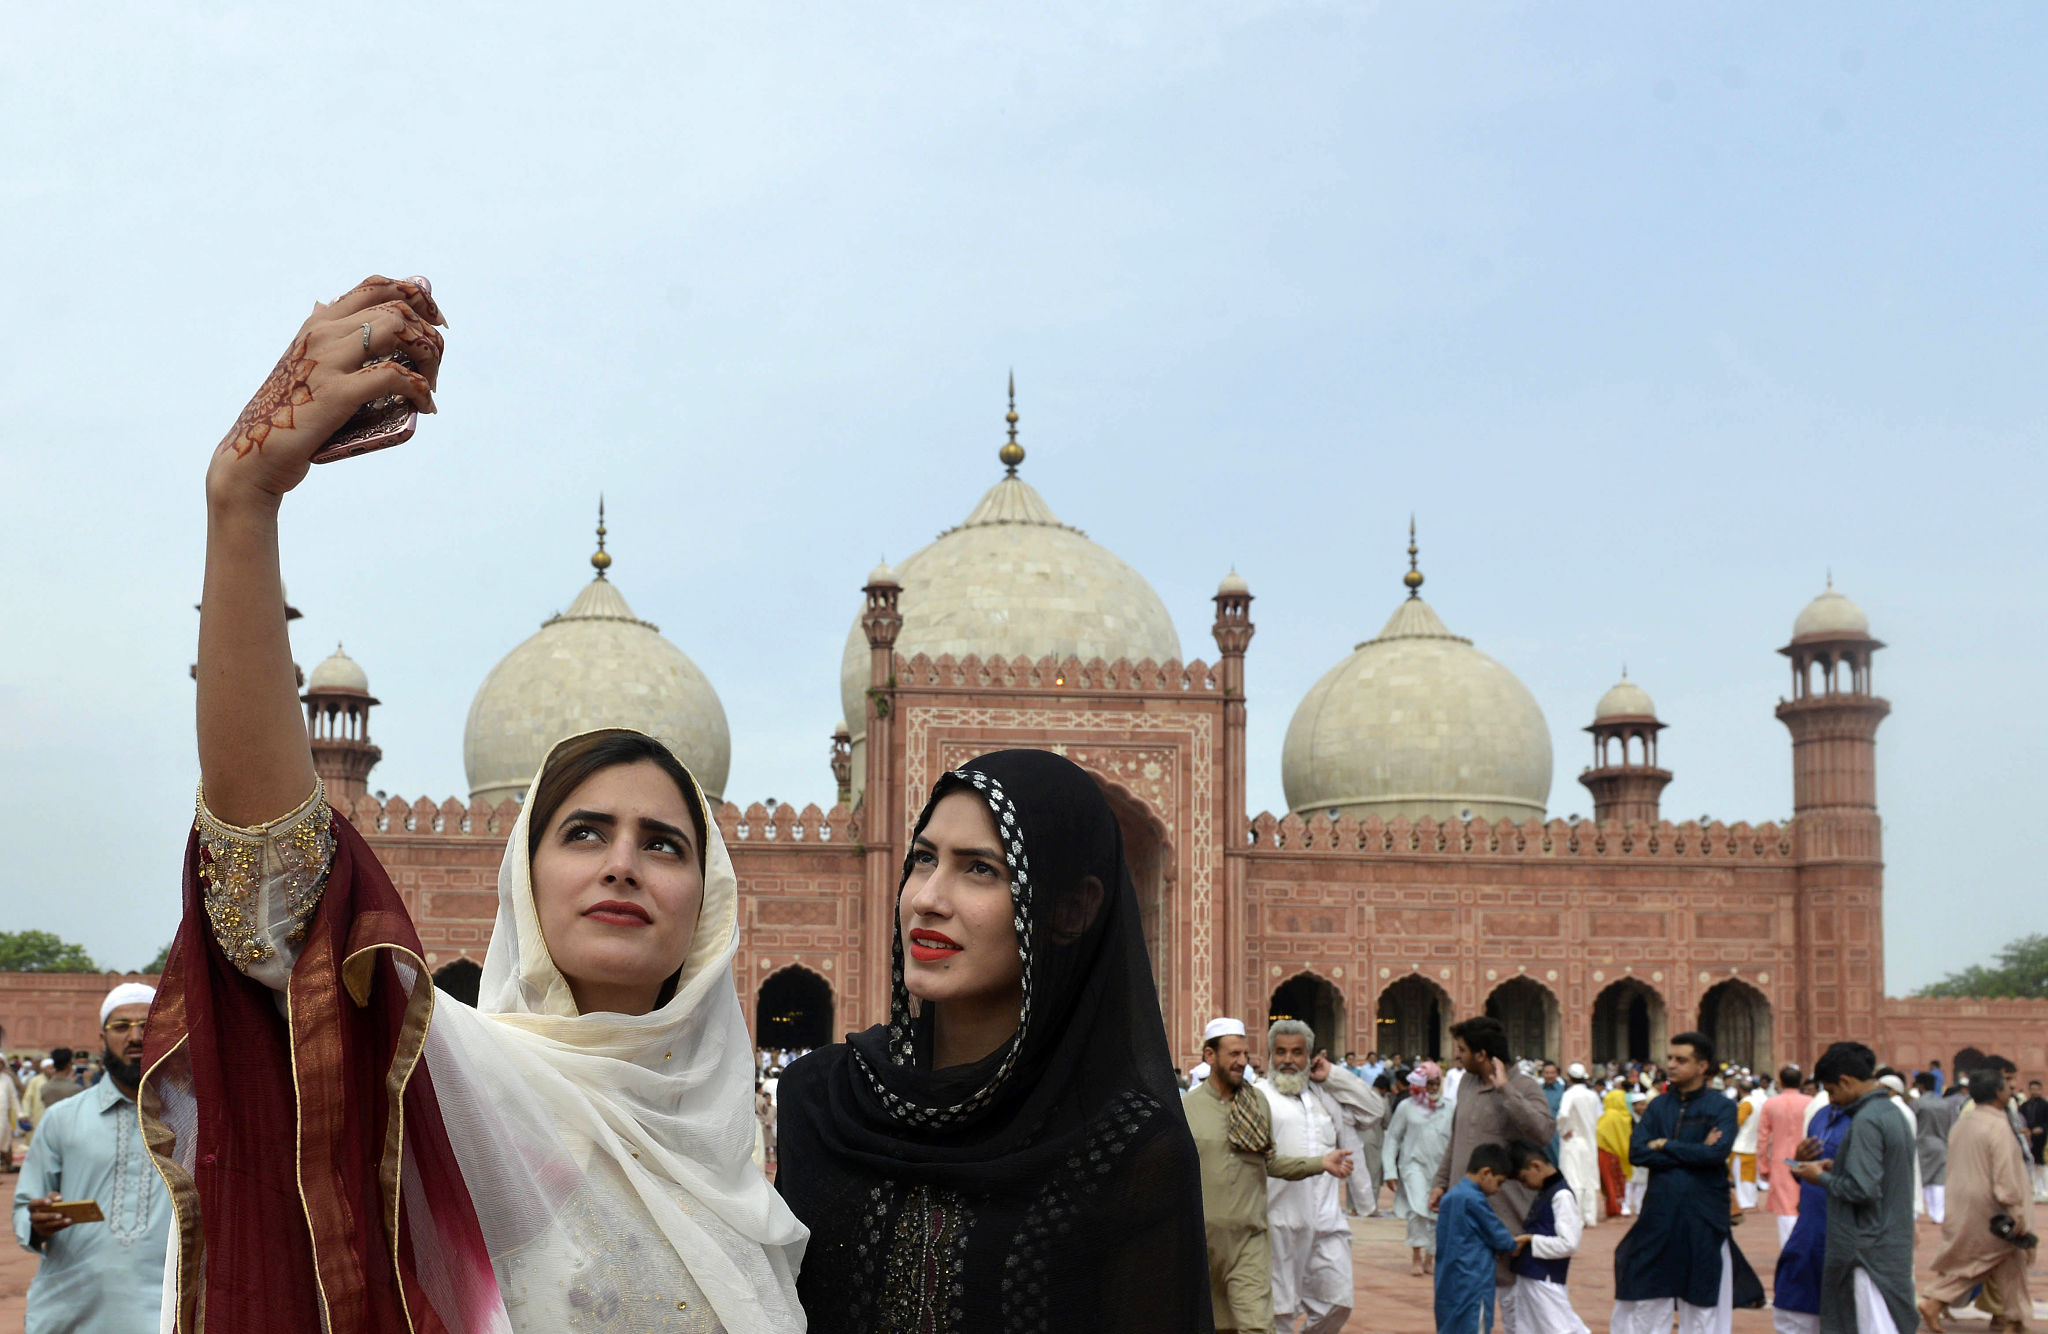 Nation celebrate Eid ul-Adha festival with jubilation, family reunion